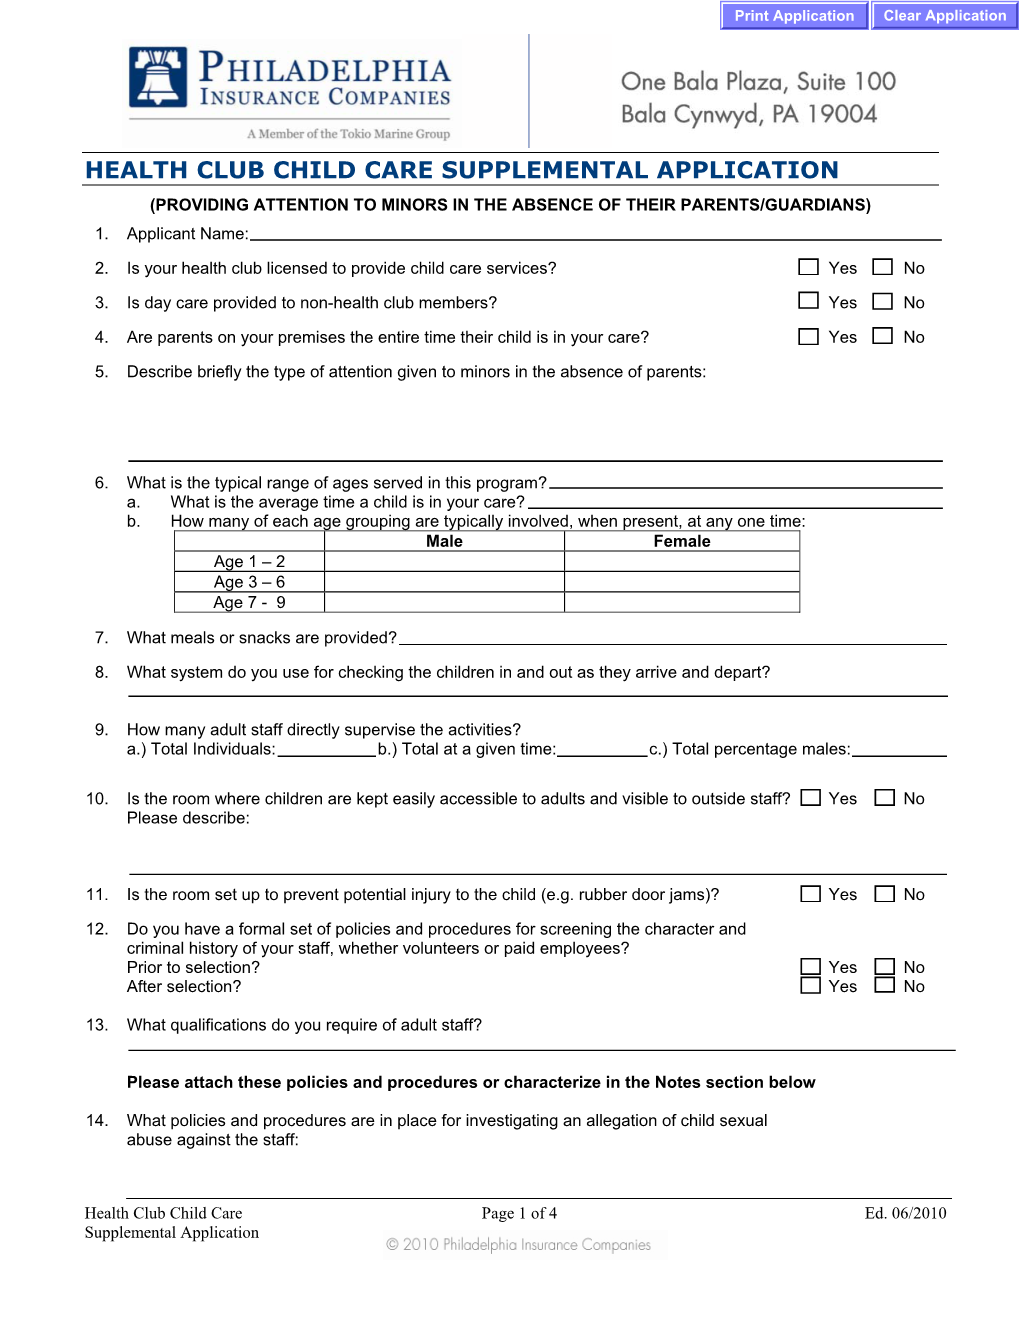 Health Club Child Care Supplemental Application